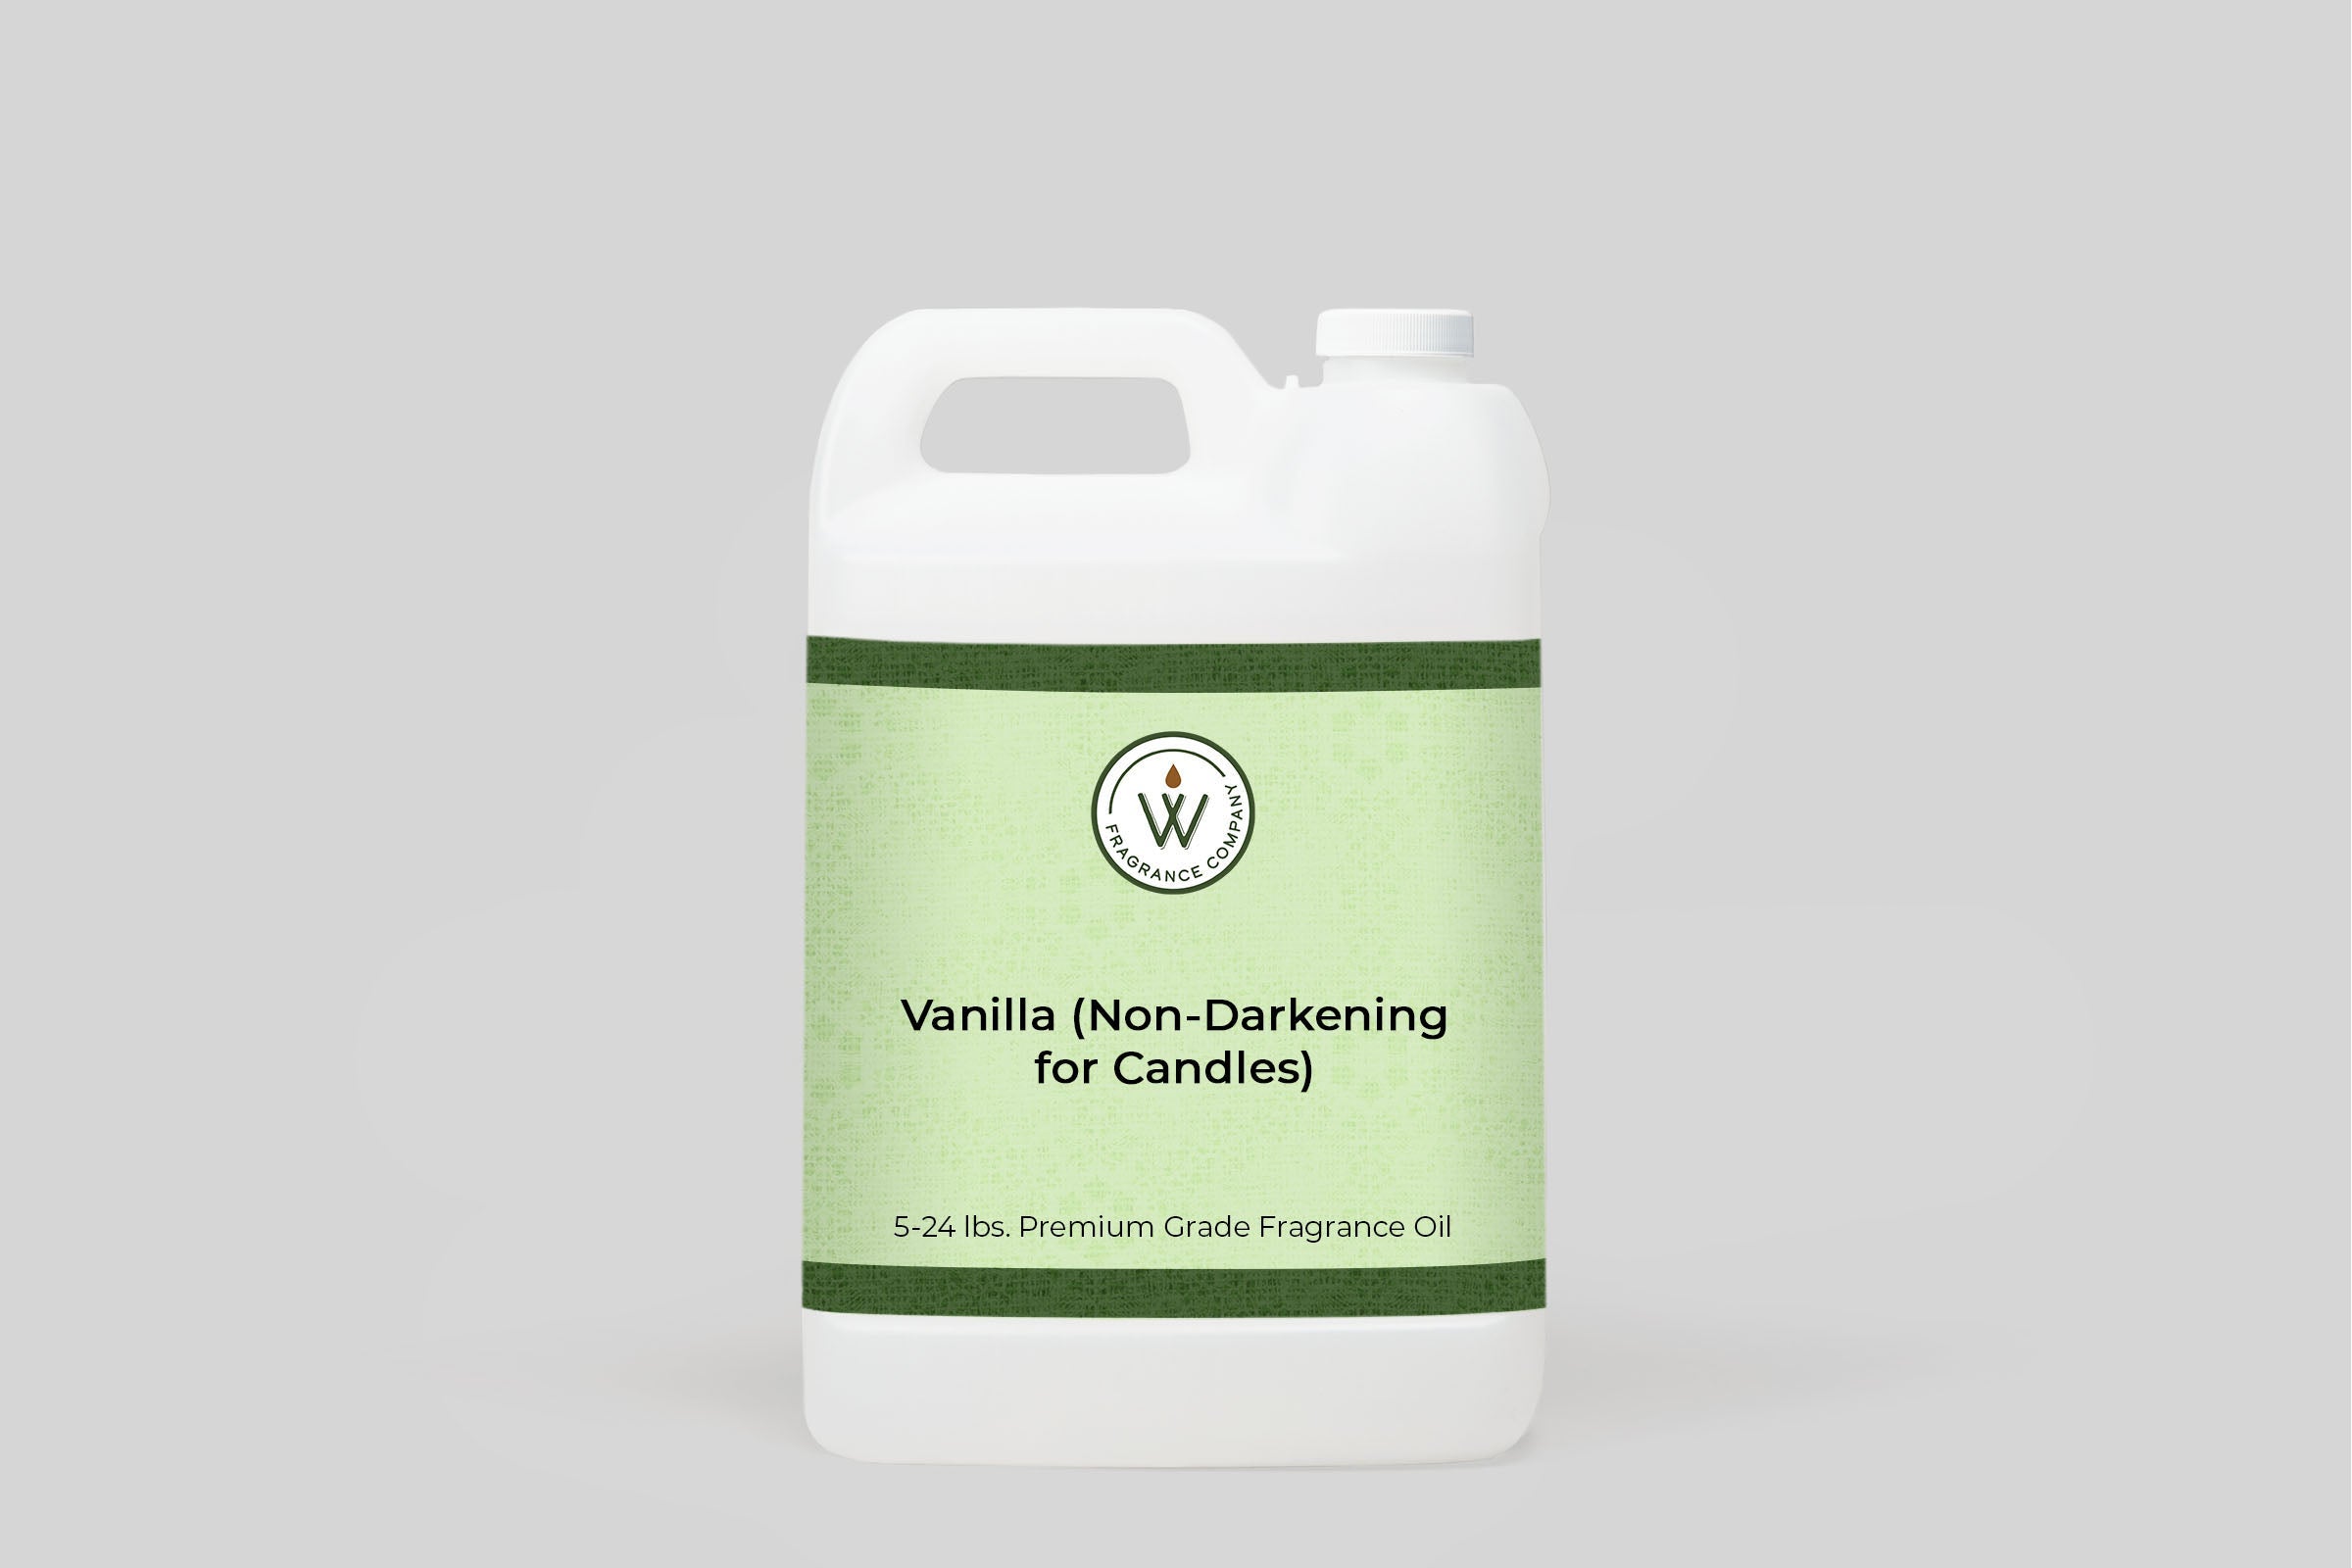 Vanilla (Non-Darkening for Candles) Fragrance Oil